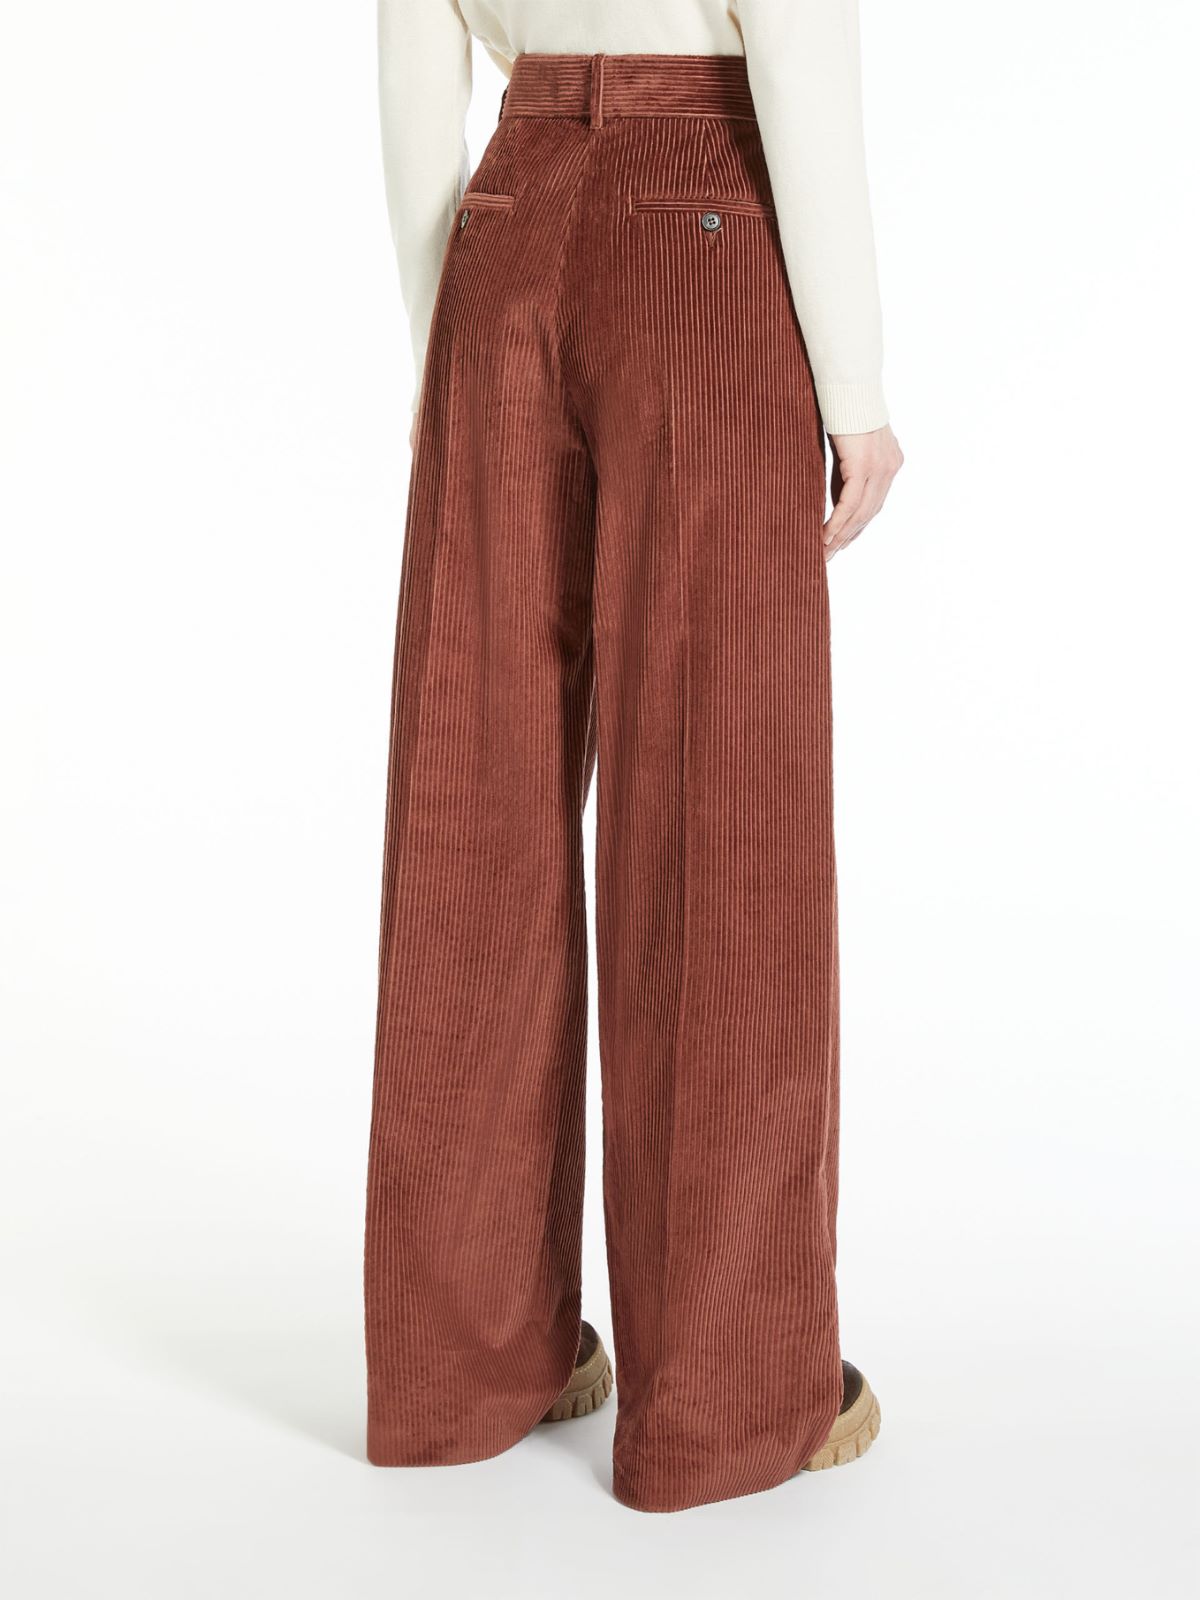 Cotton velvet trousers - RUST - Weekend Max Mara - 3